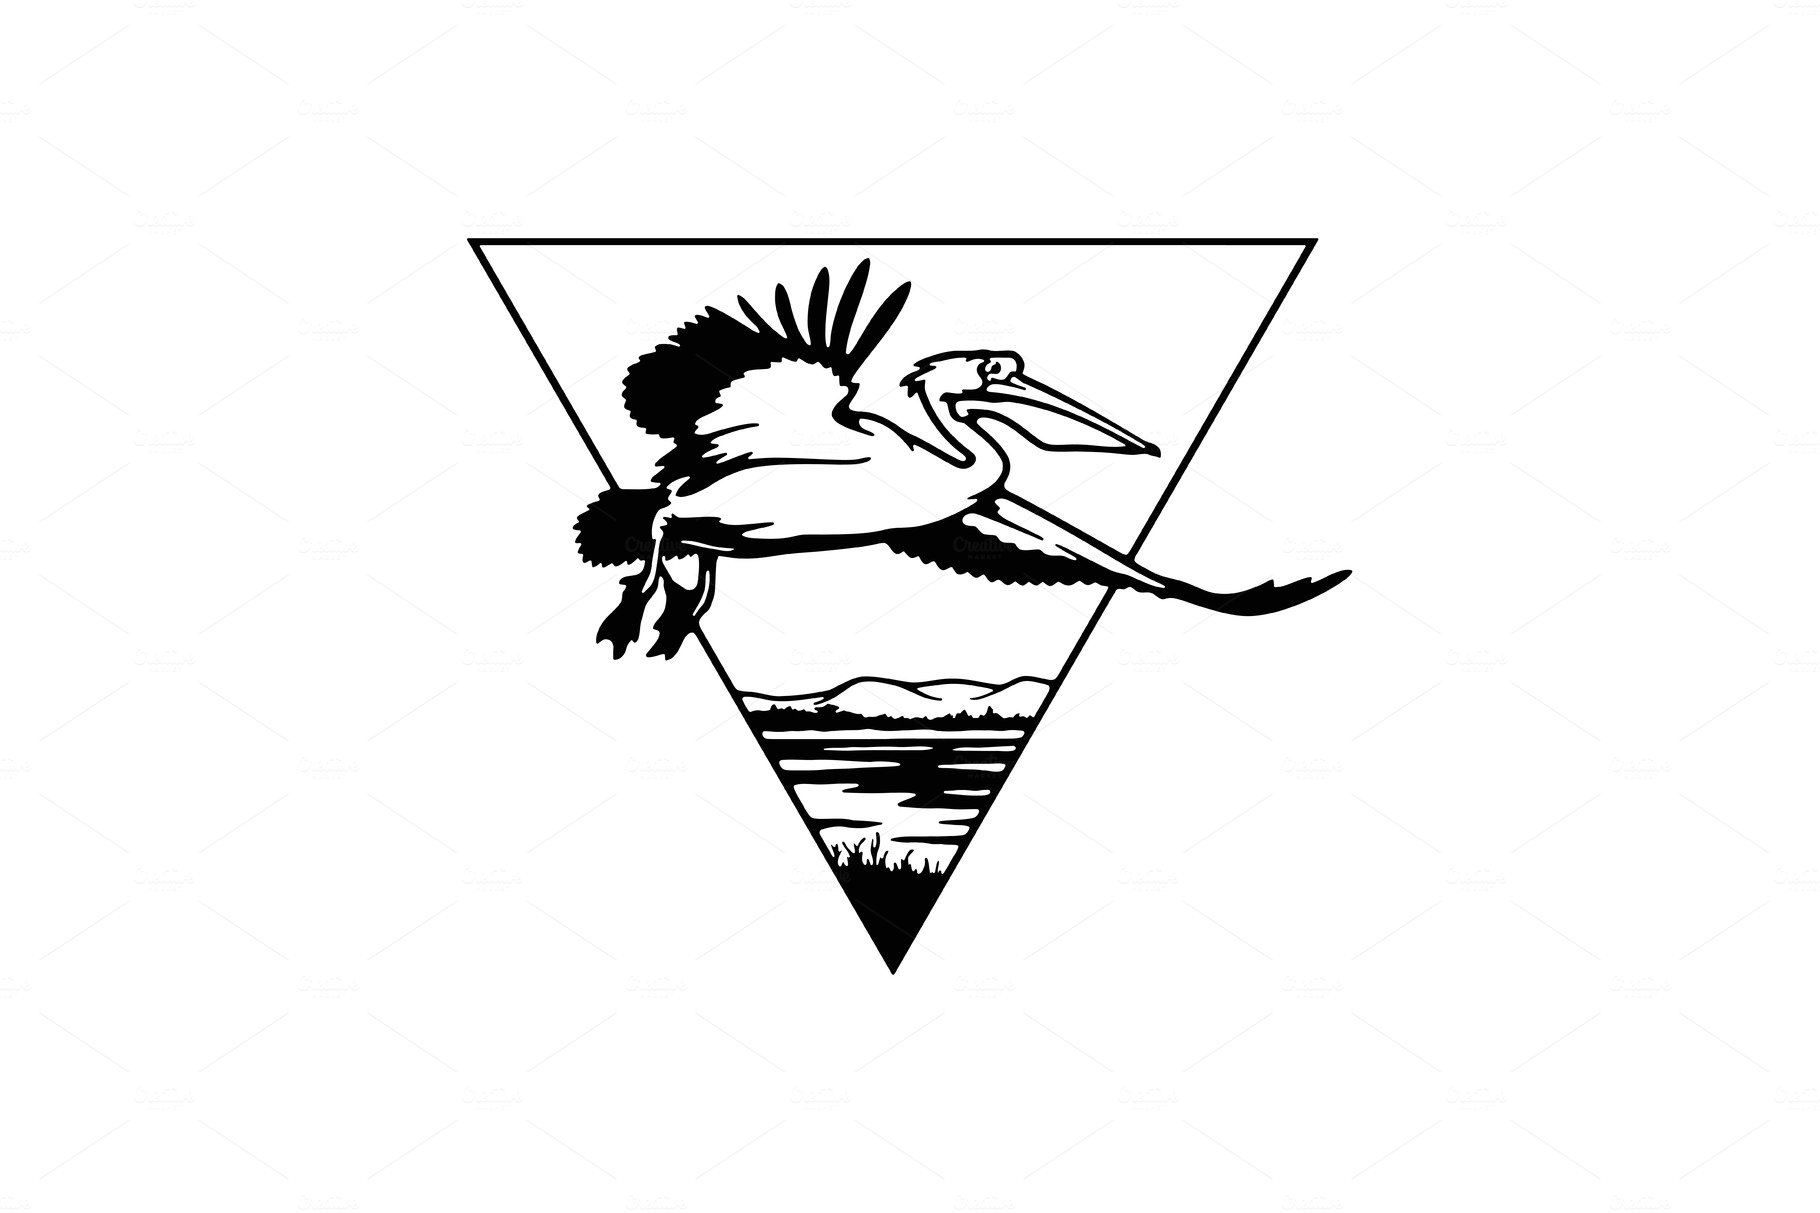 Pelican, Flight Wildlife, Wildlife cover image.